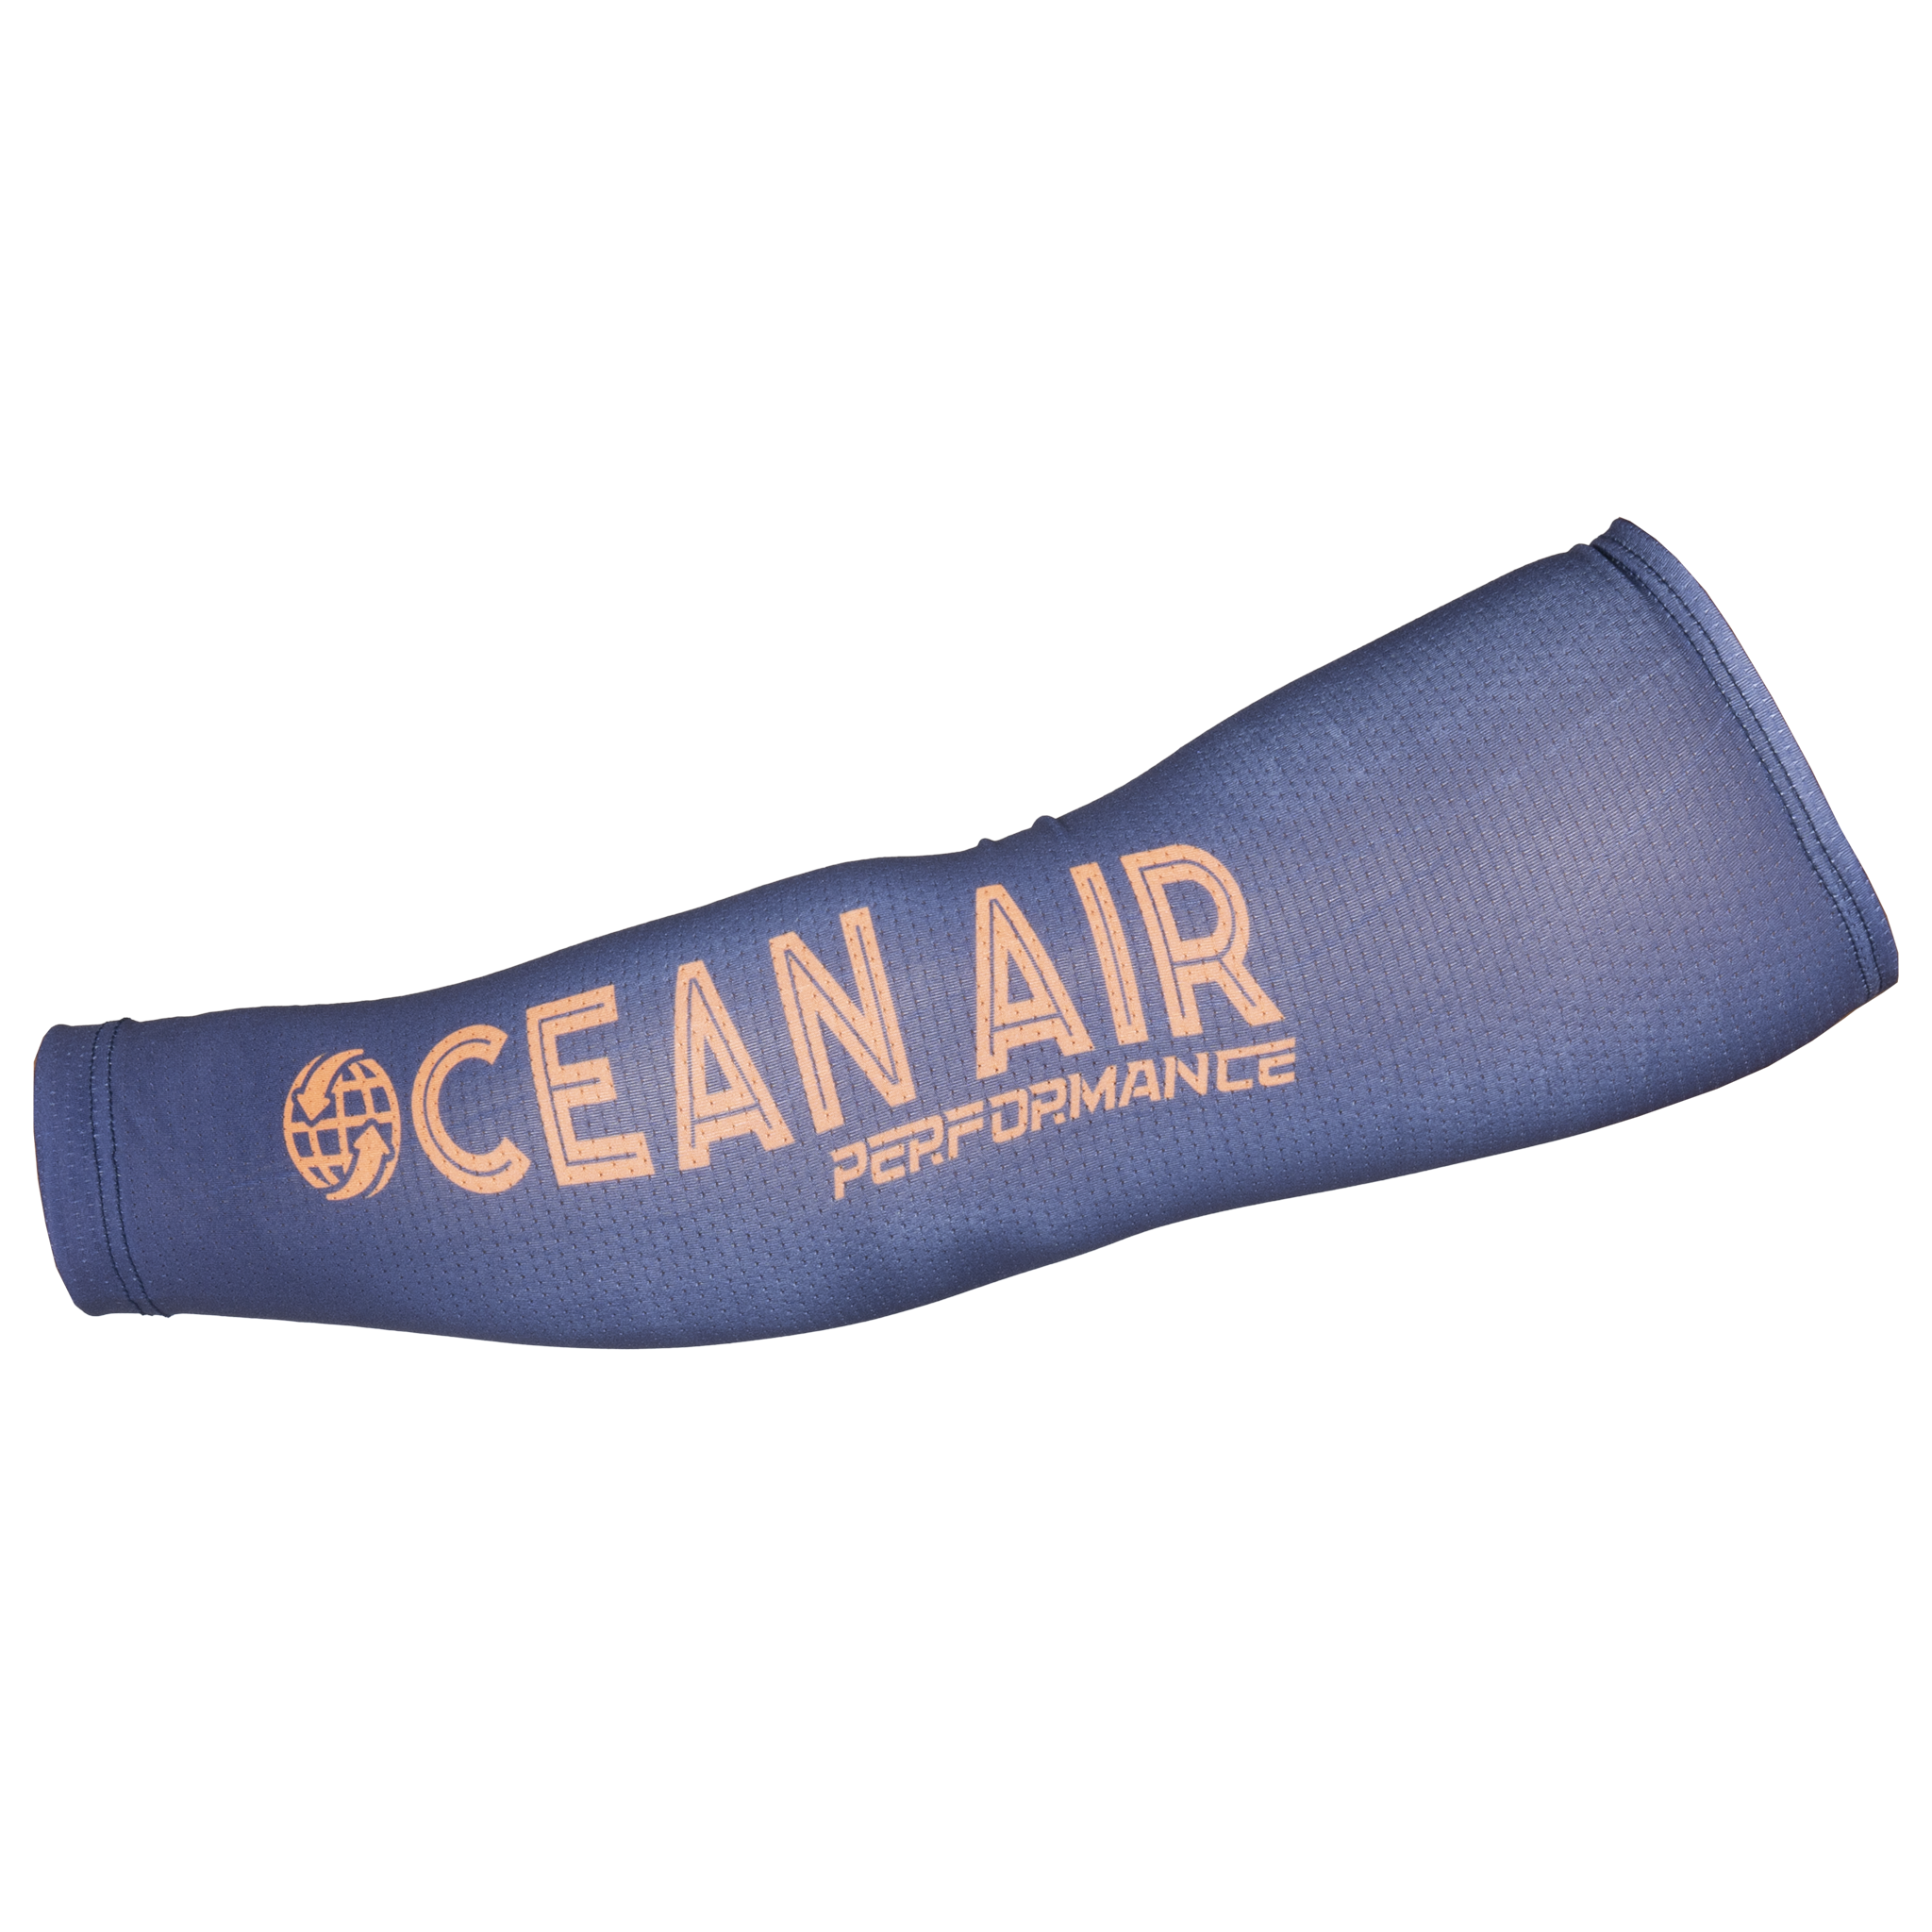 Ocean Air Sleeve